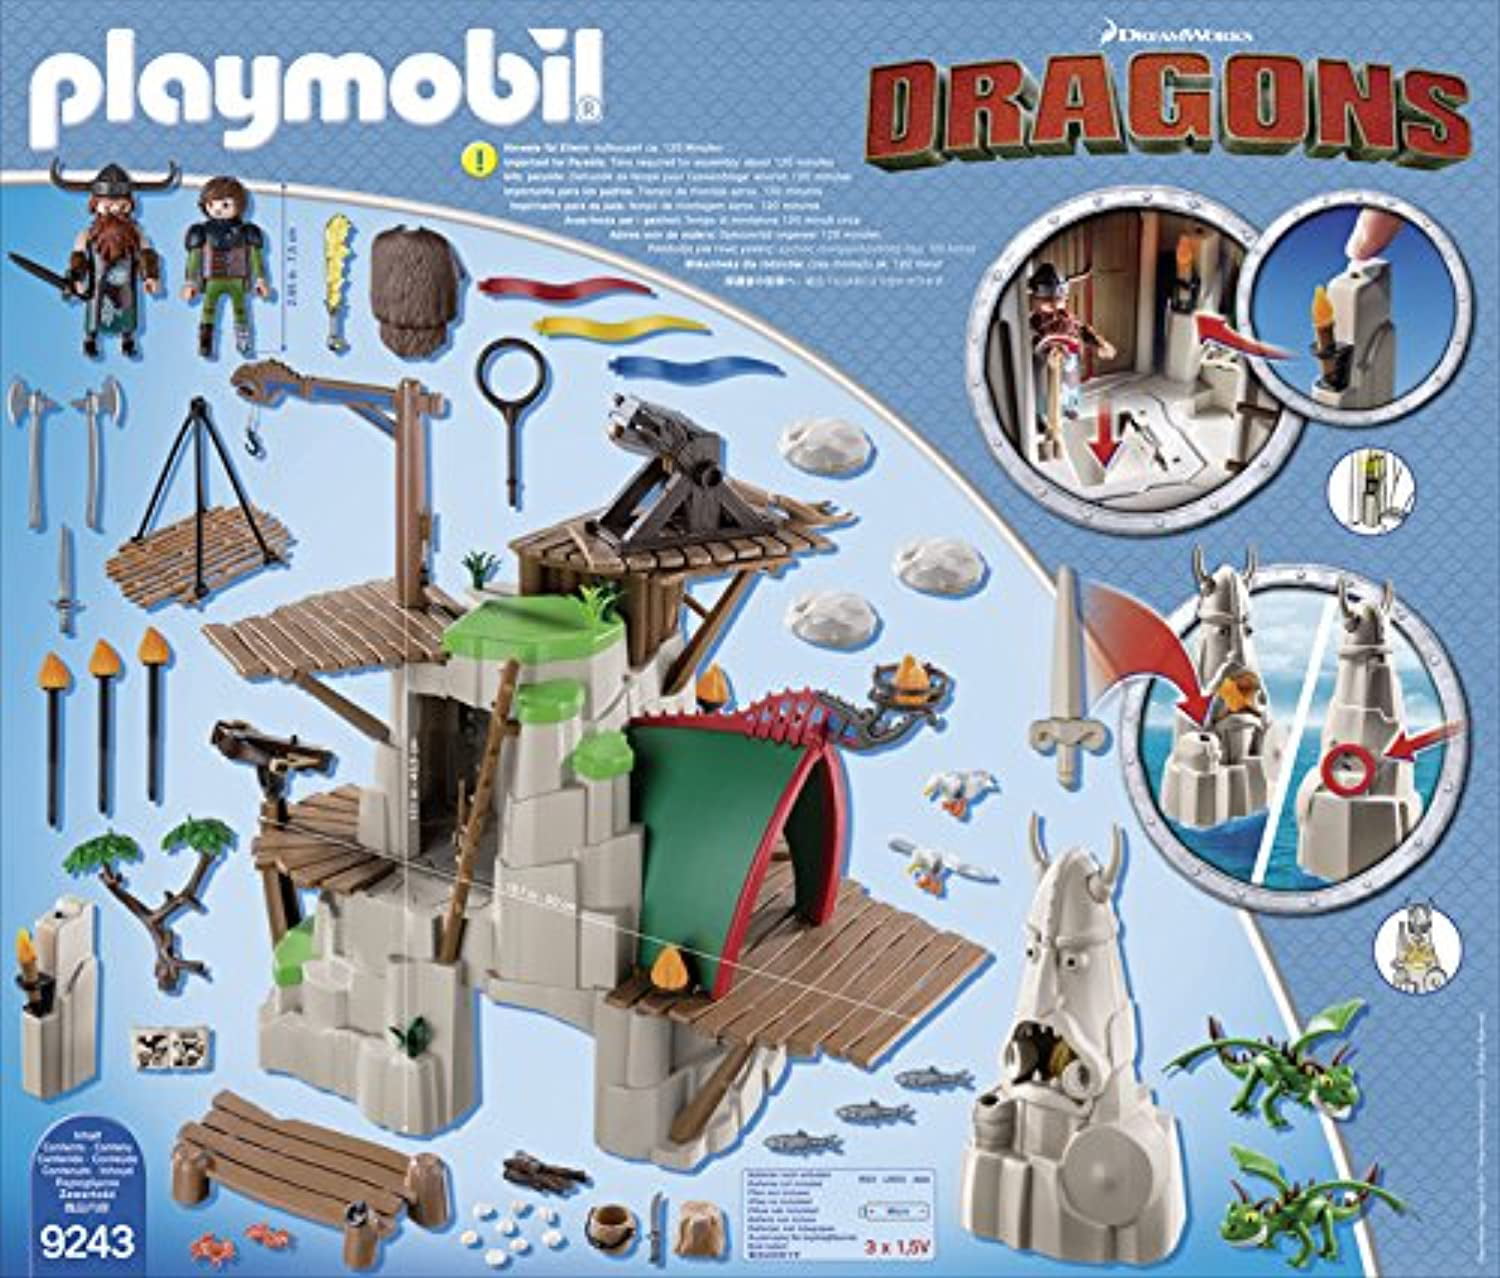 Playmobil DRAGONS #9243 Berk - New Factory Sealed Walmart.com